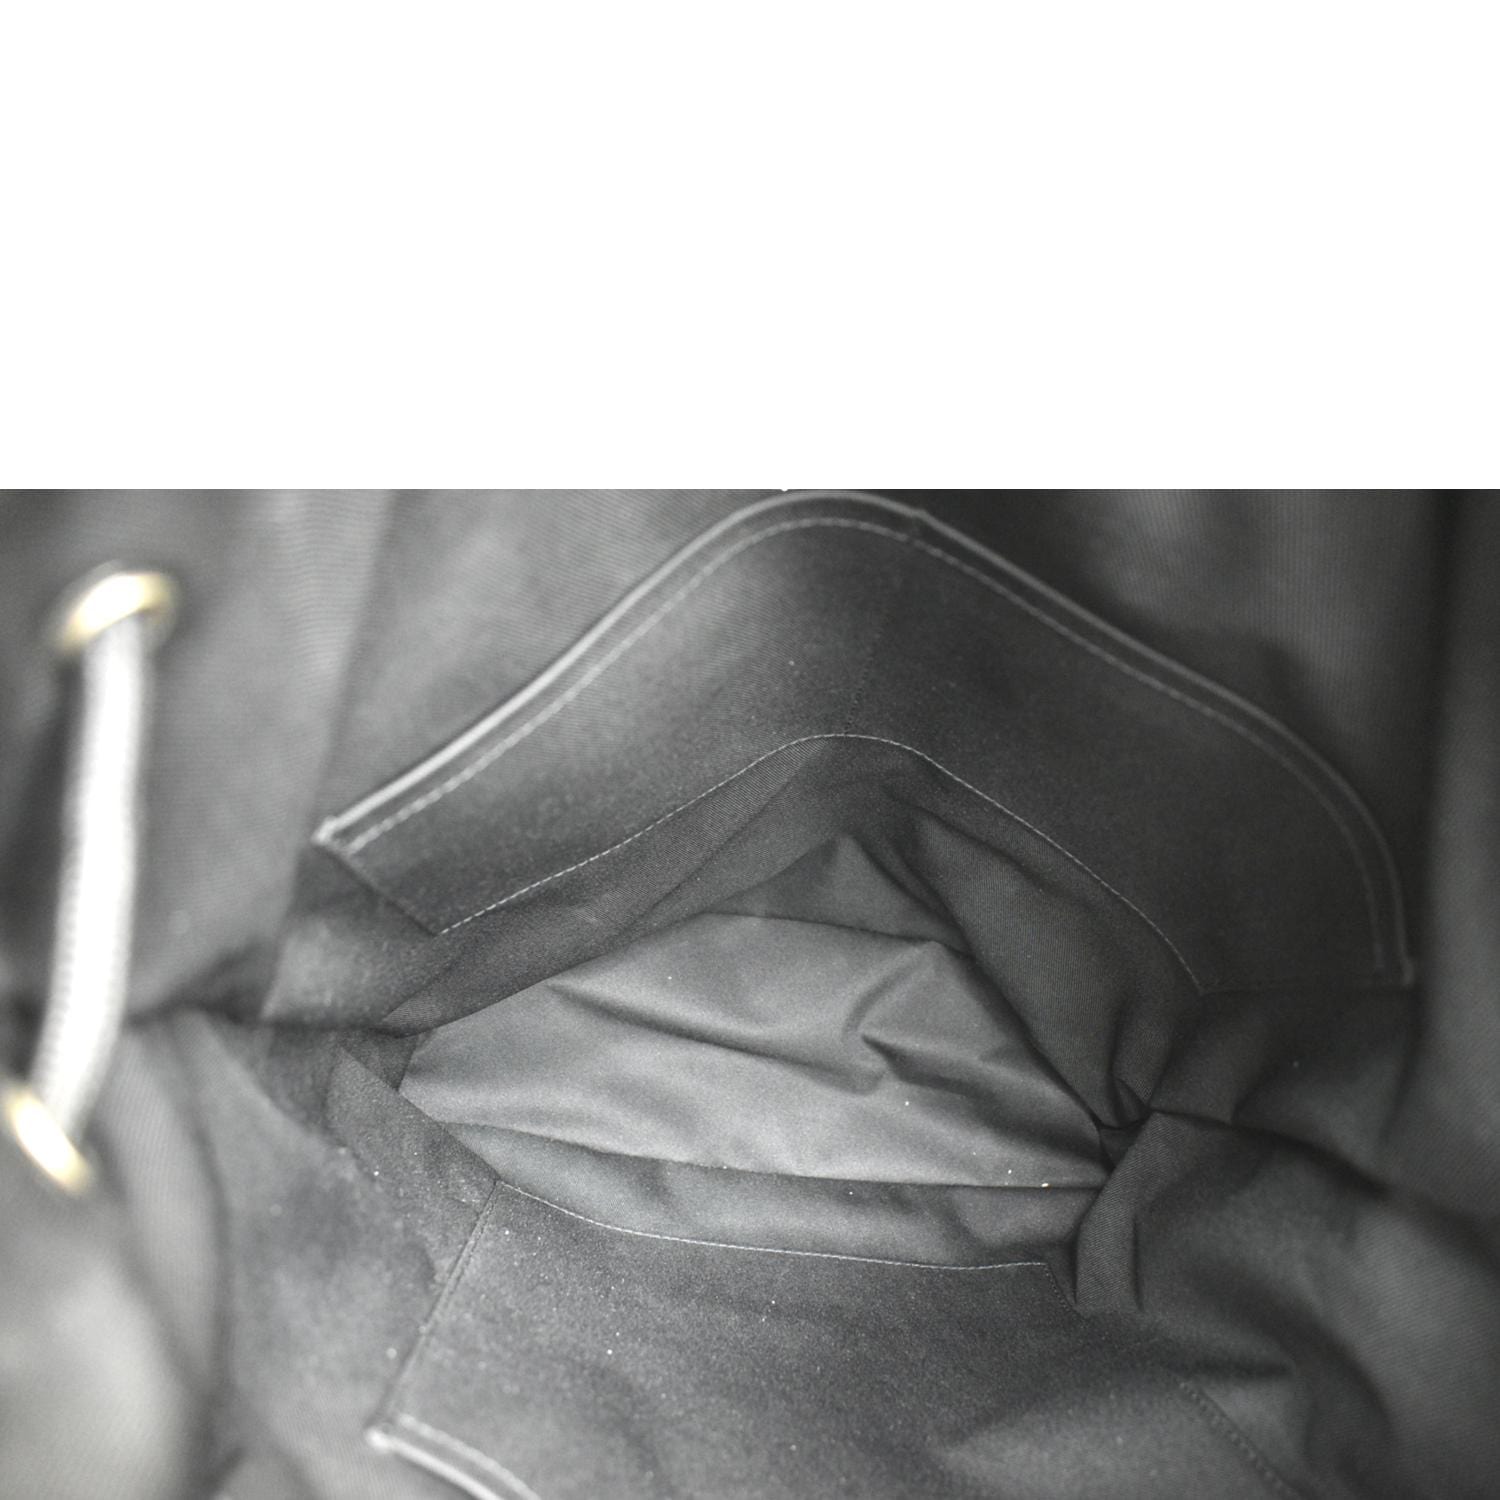 Louis Vuitton Christopher Backpack Limited Edition Nemeth Damier Graphite PM Black